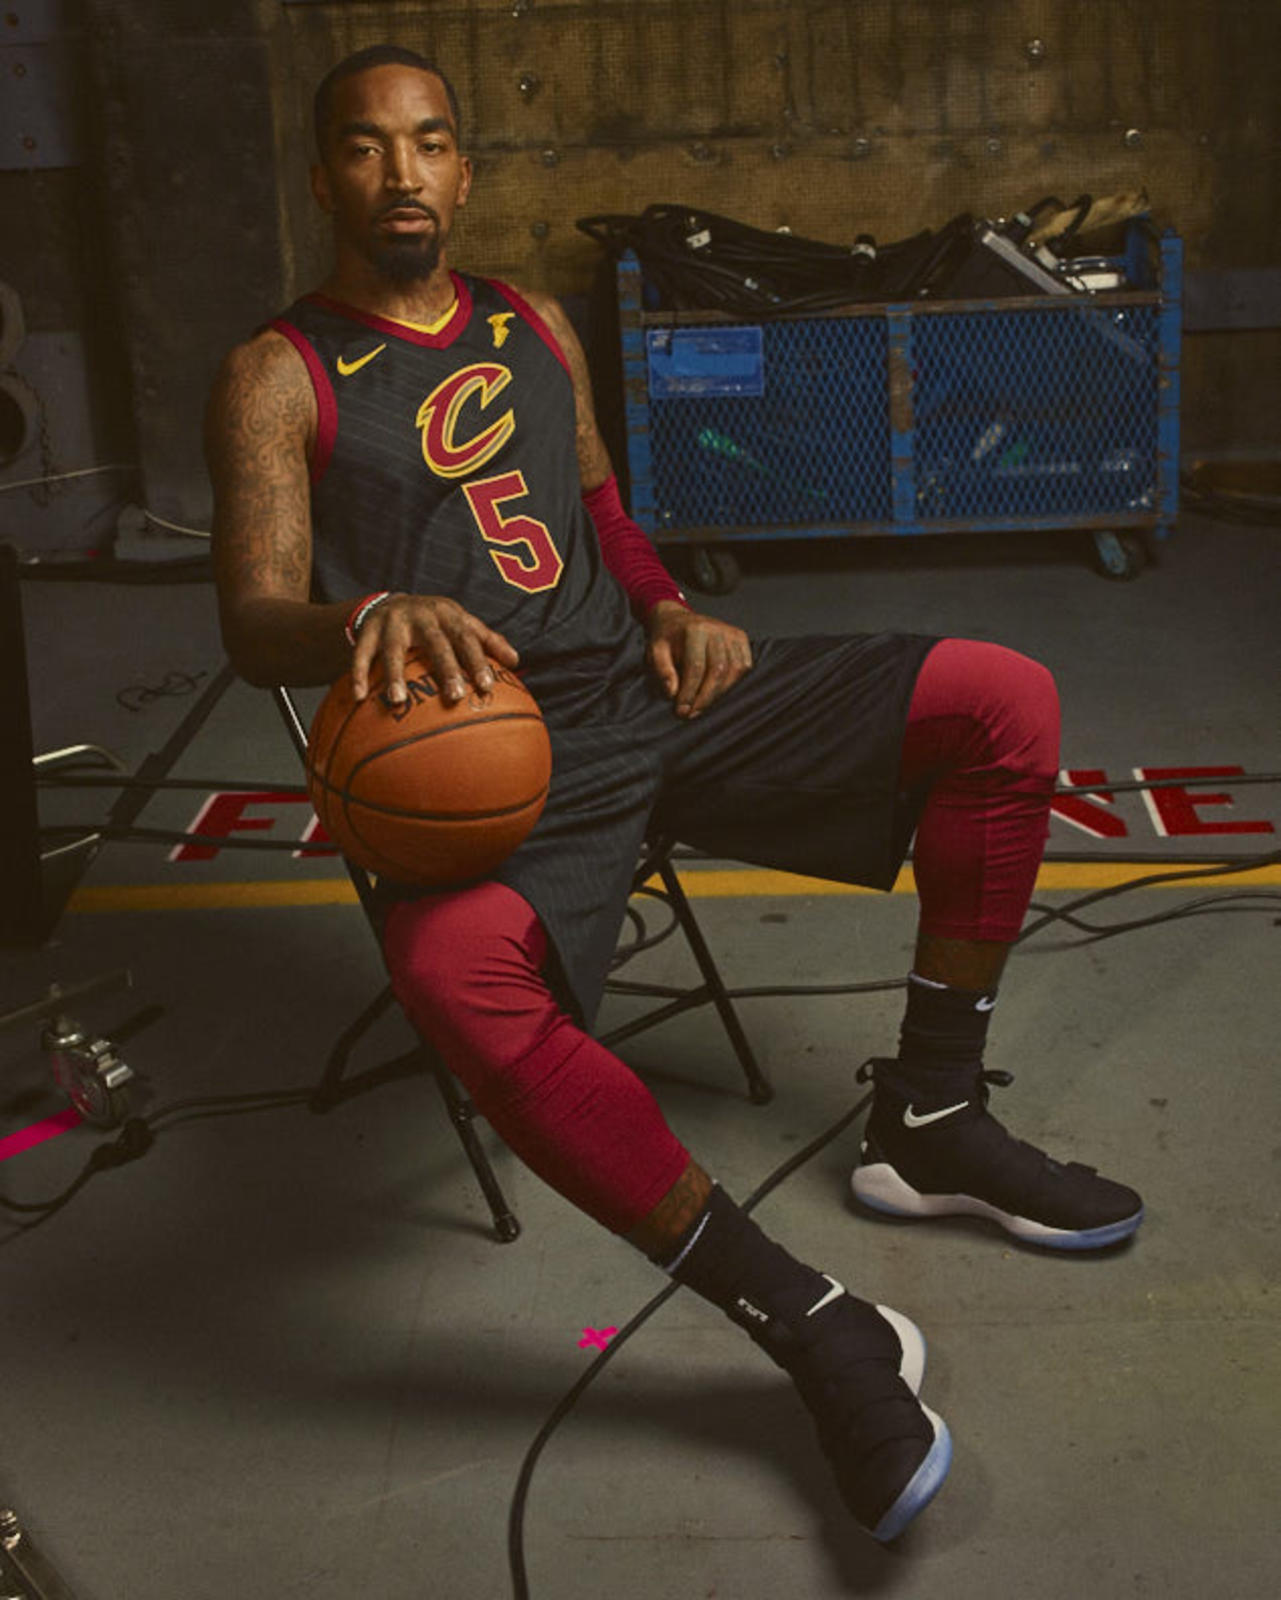 Nike NBA Statement Edition uniform